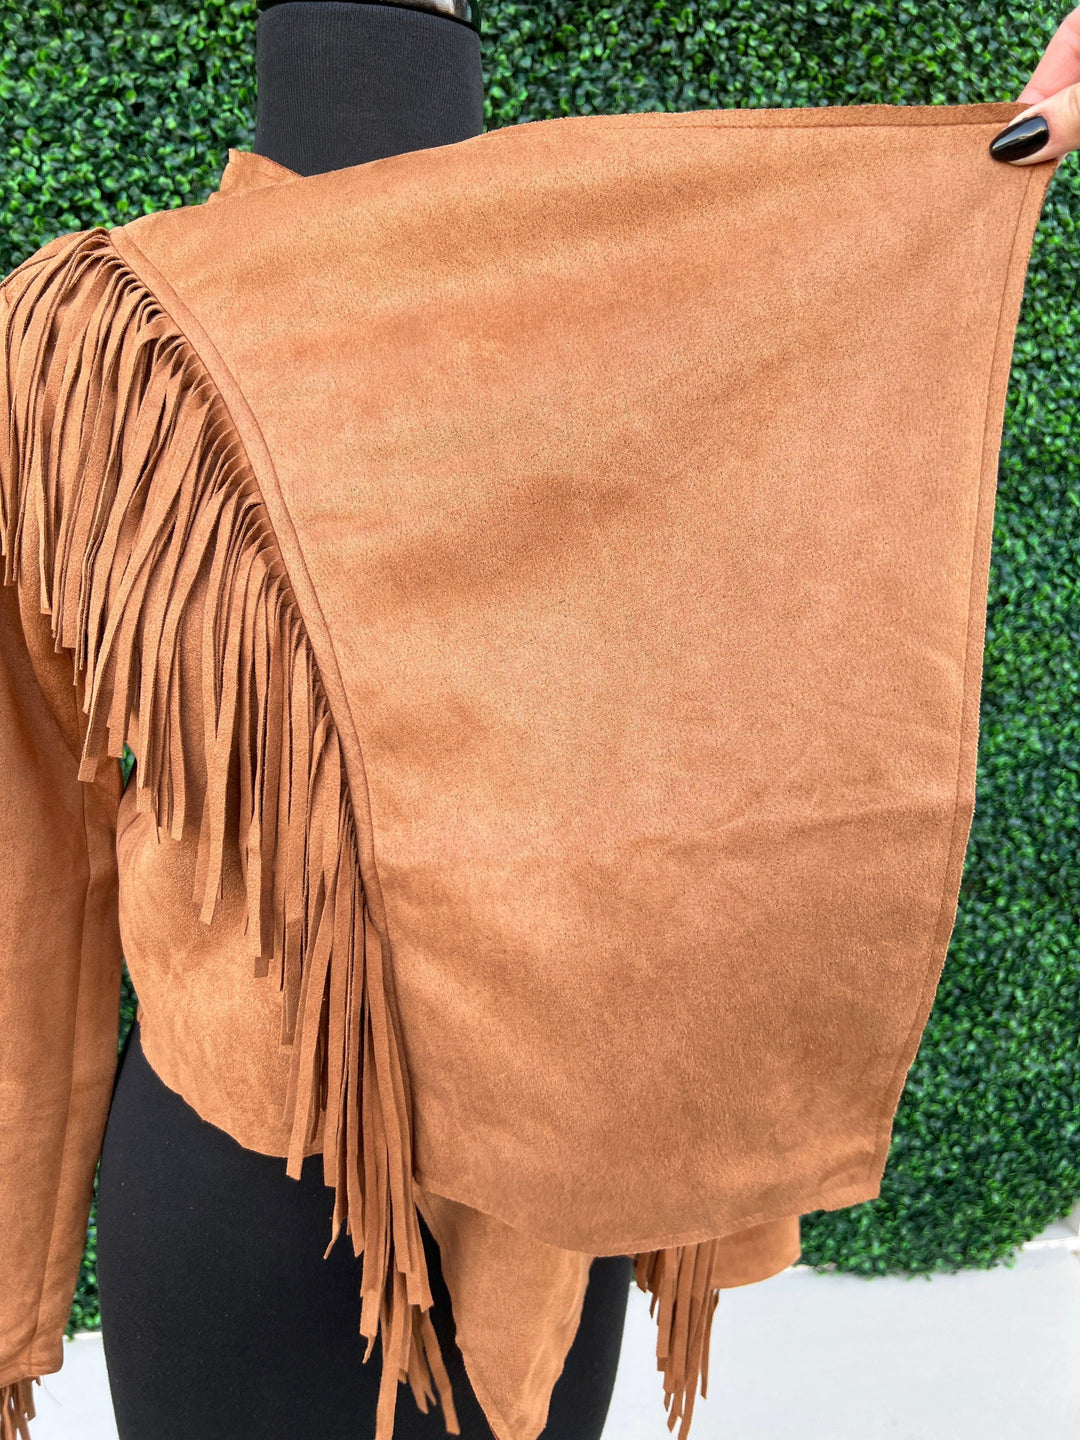 fringe camel brown western style jacket